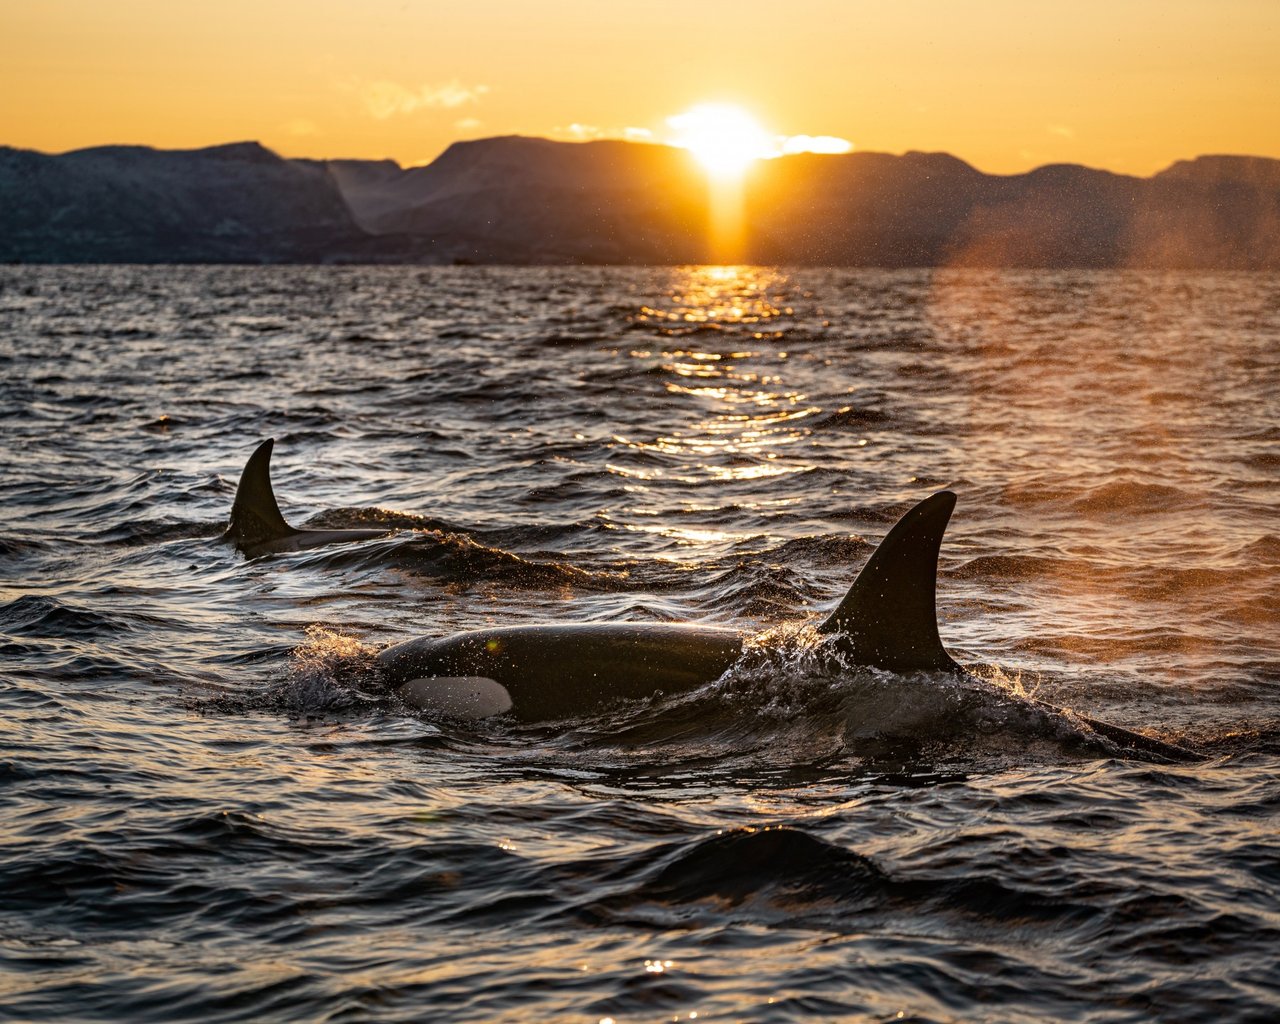 Wild Orcas surface at sunset. Credit: Bart Van Meele